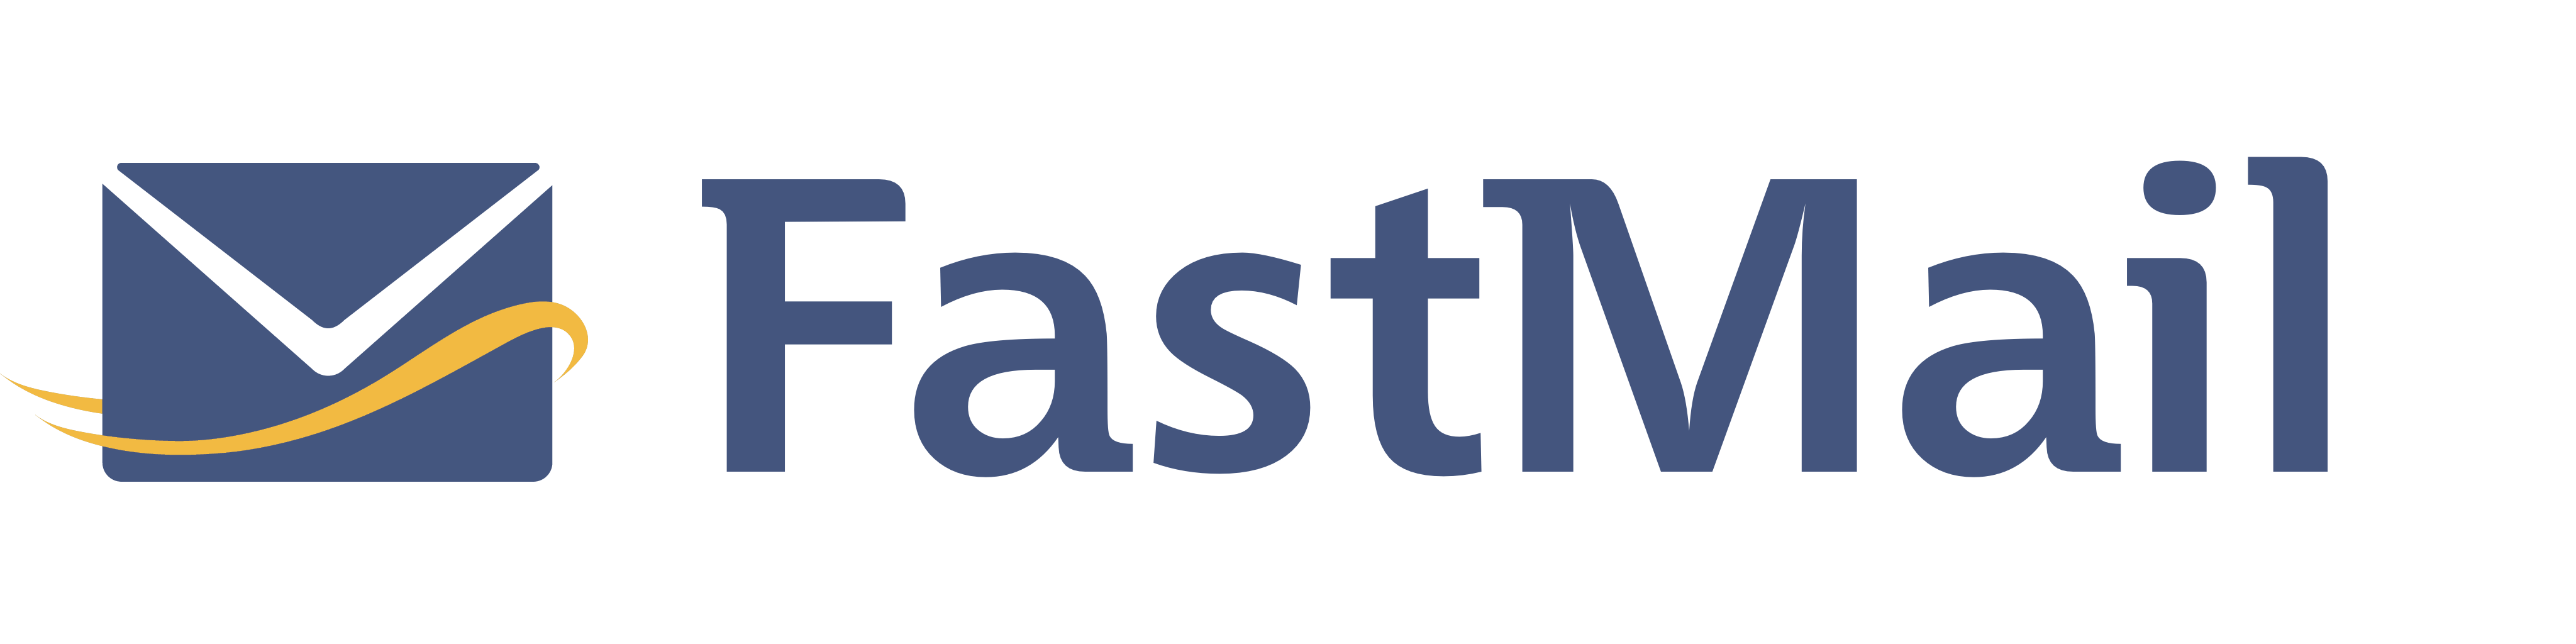 Mail.com Logo - 11 Best online webmail services as of 2019 - Slant